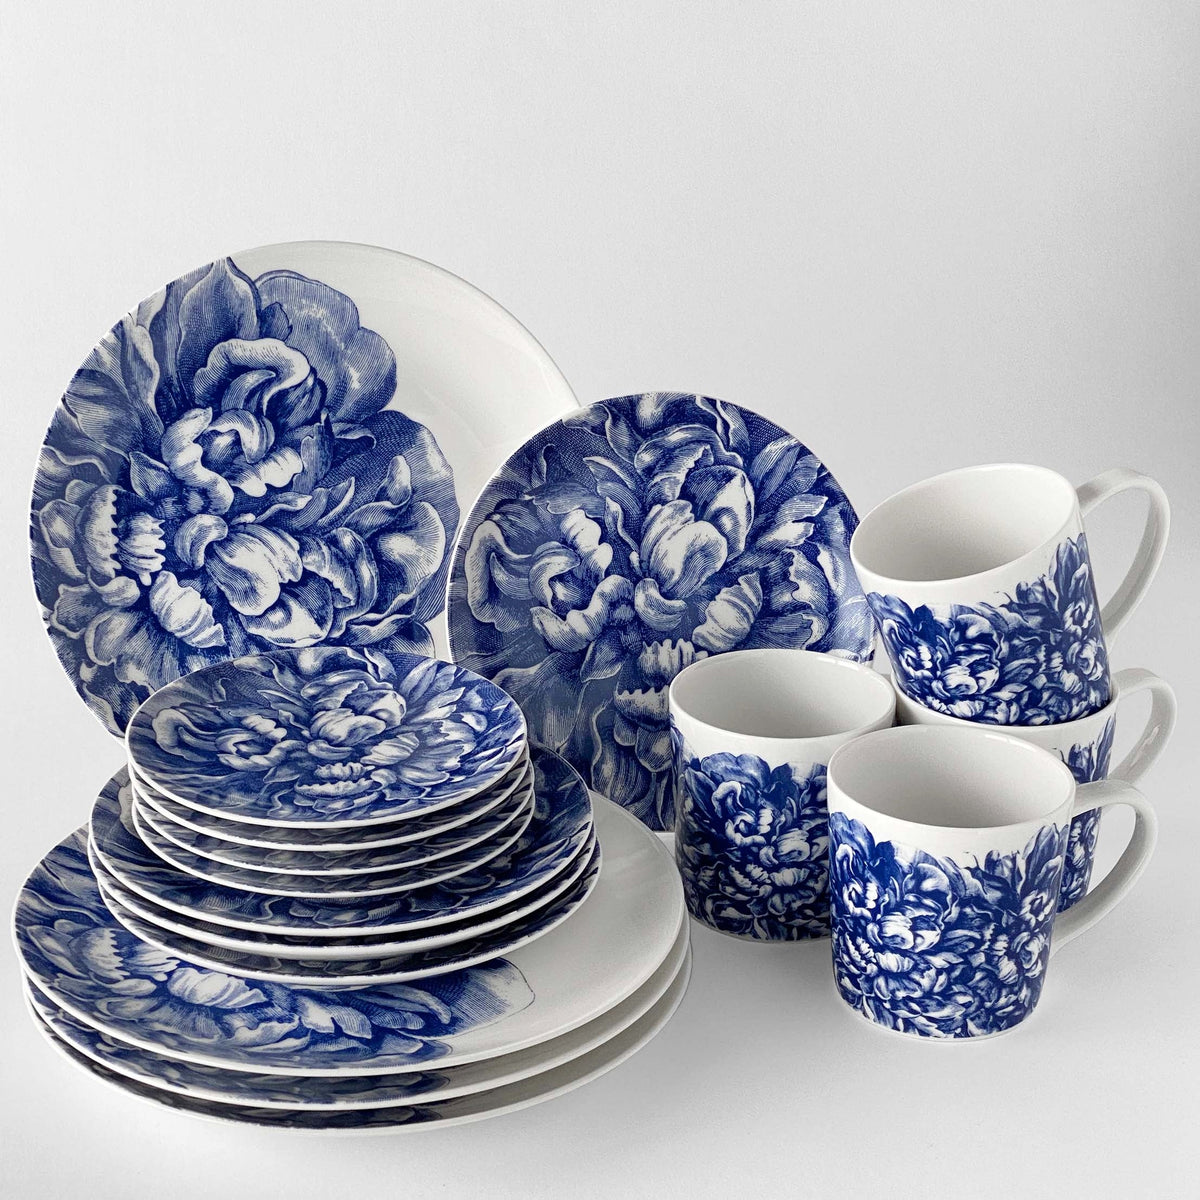 A stunning Peony Mug Blue dinnerware set with a peony pattern from Caskata Artisanal Home.